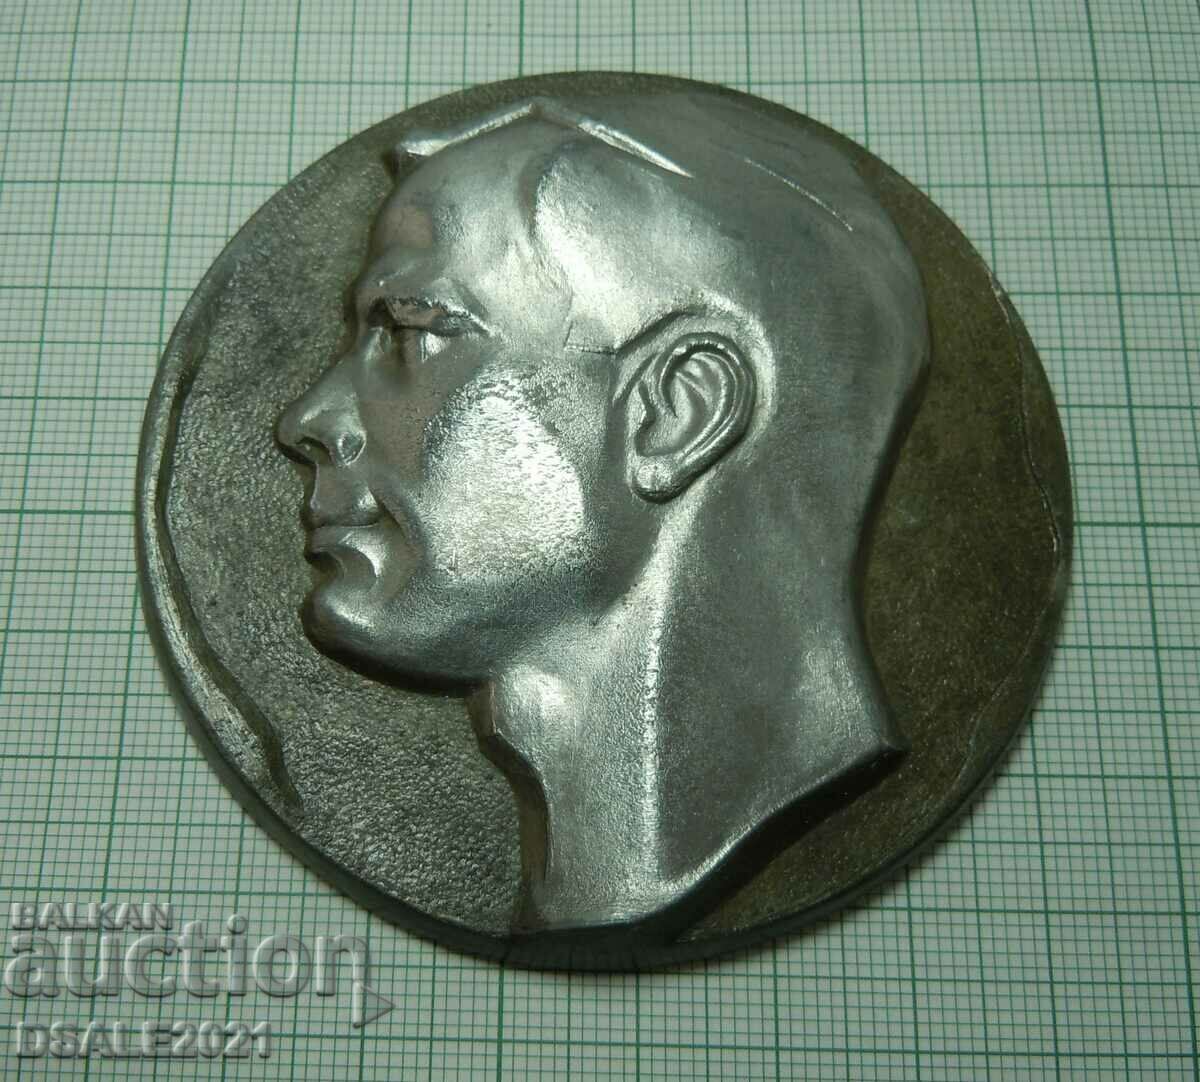 COSMOS 1961 Yu. Gagarin cosmonaut USSR plaque table medal